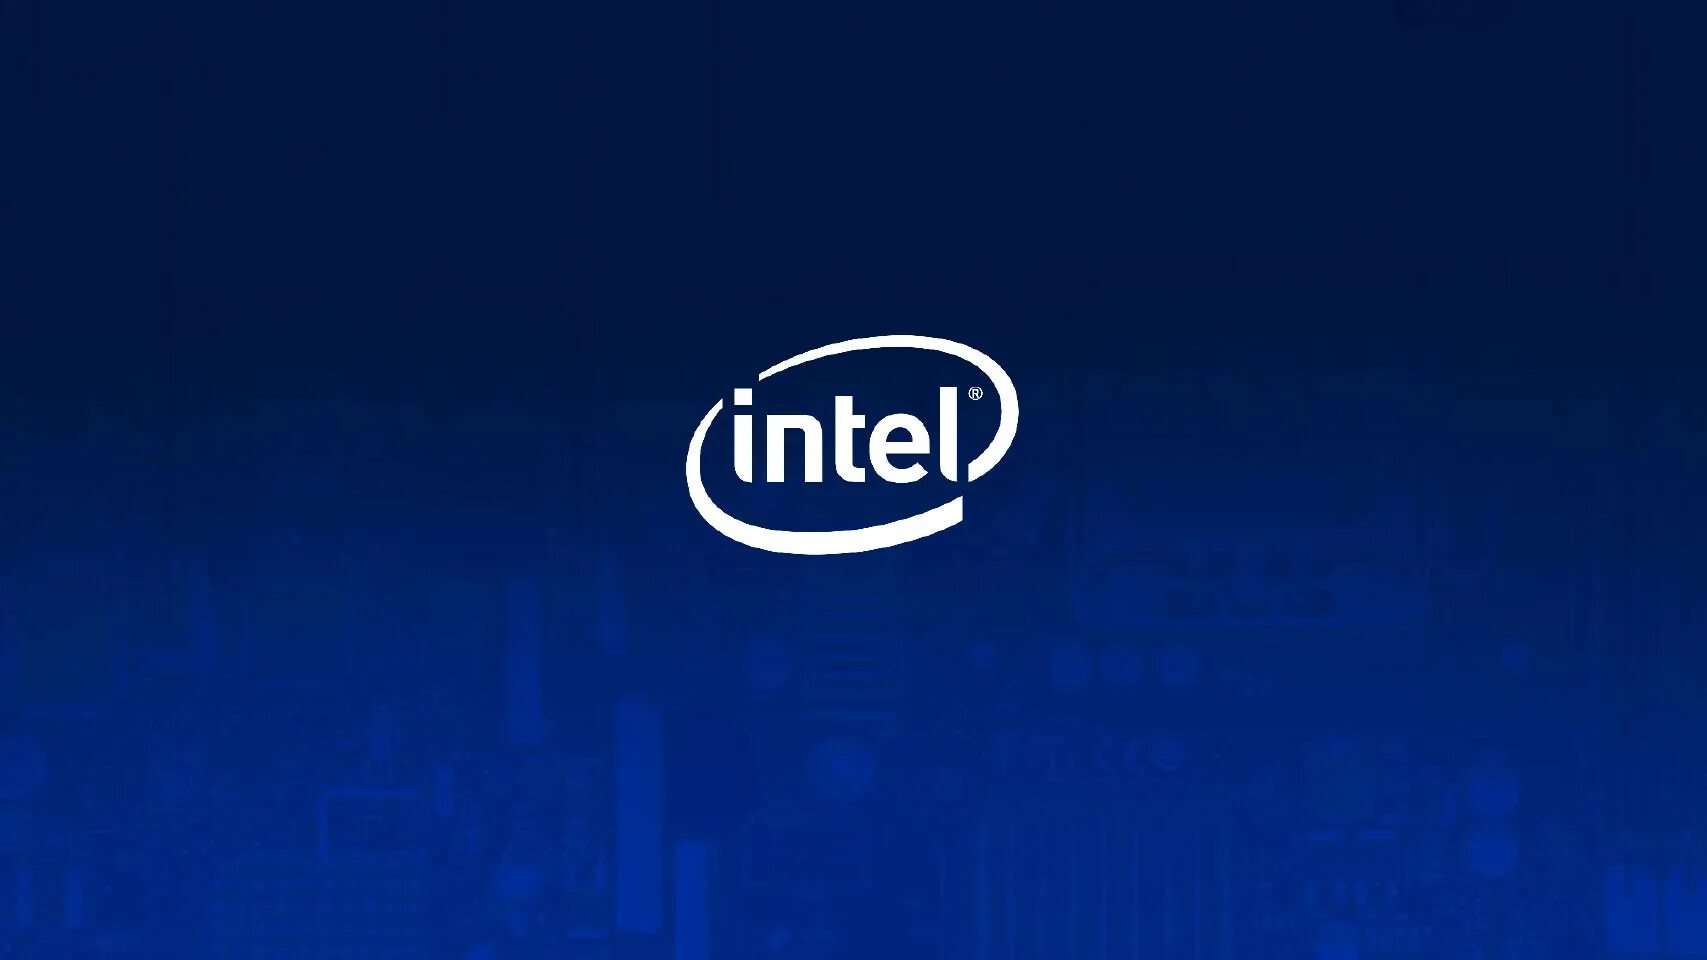 Обои Intel Core i5. Логотип Intel. Intel обложка. Слоган Интел.